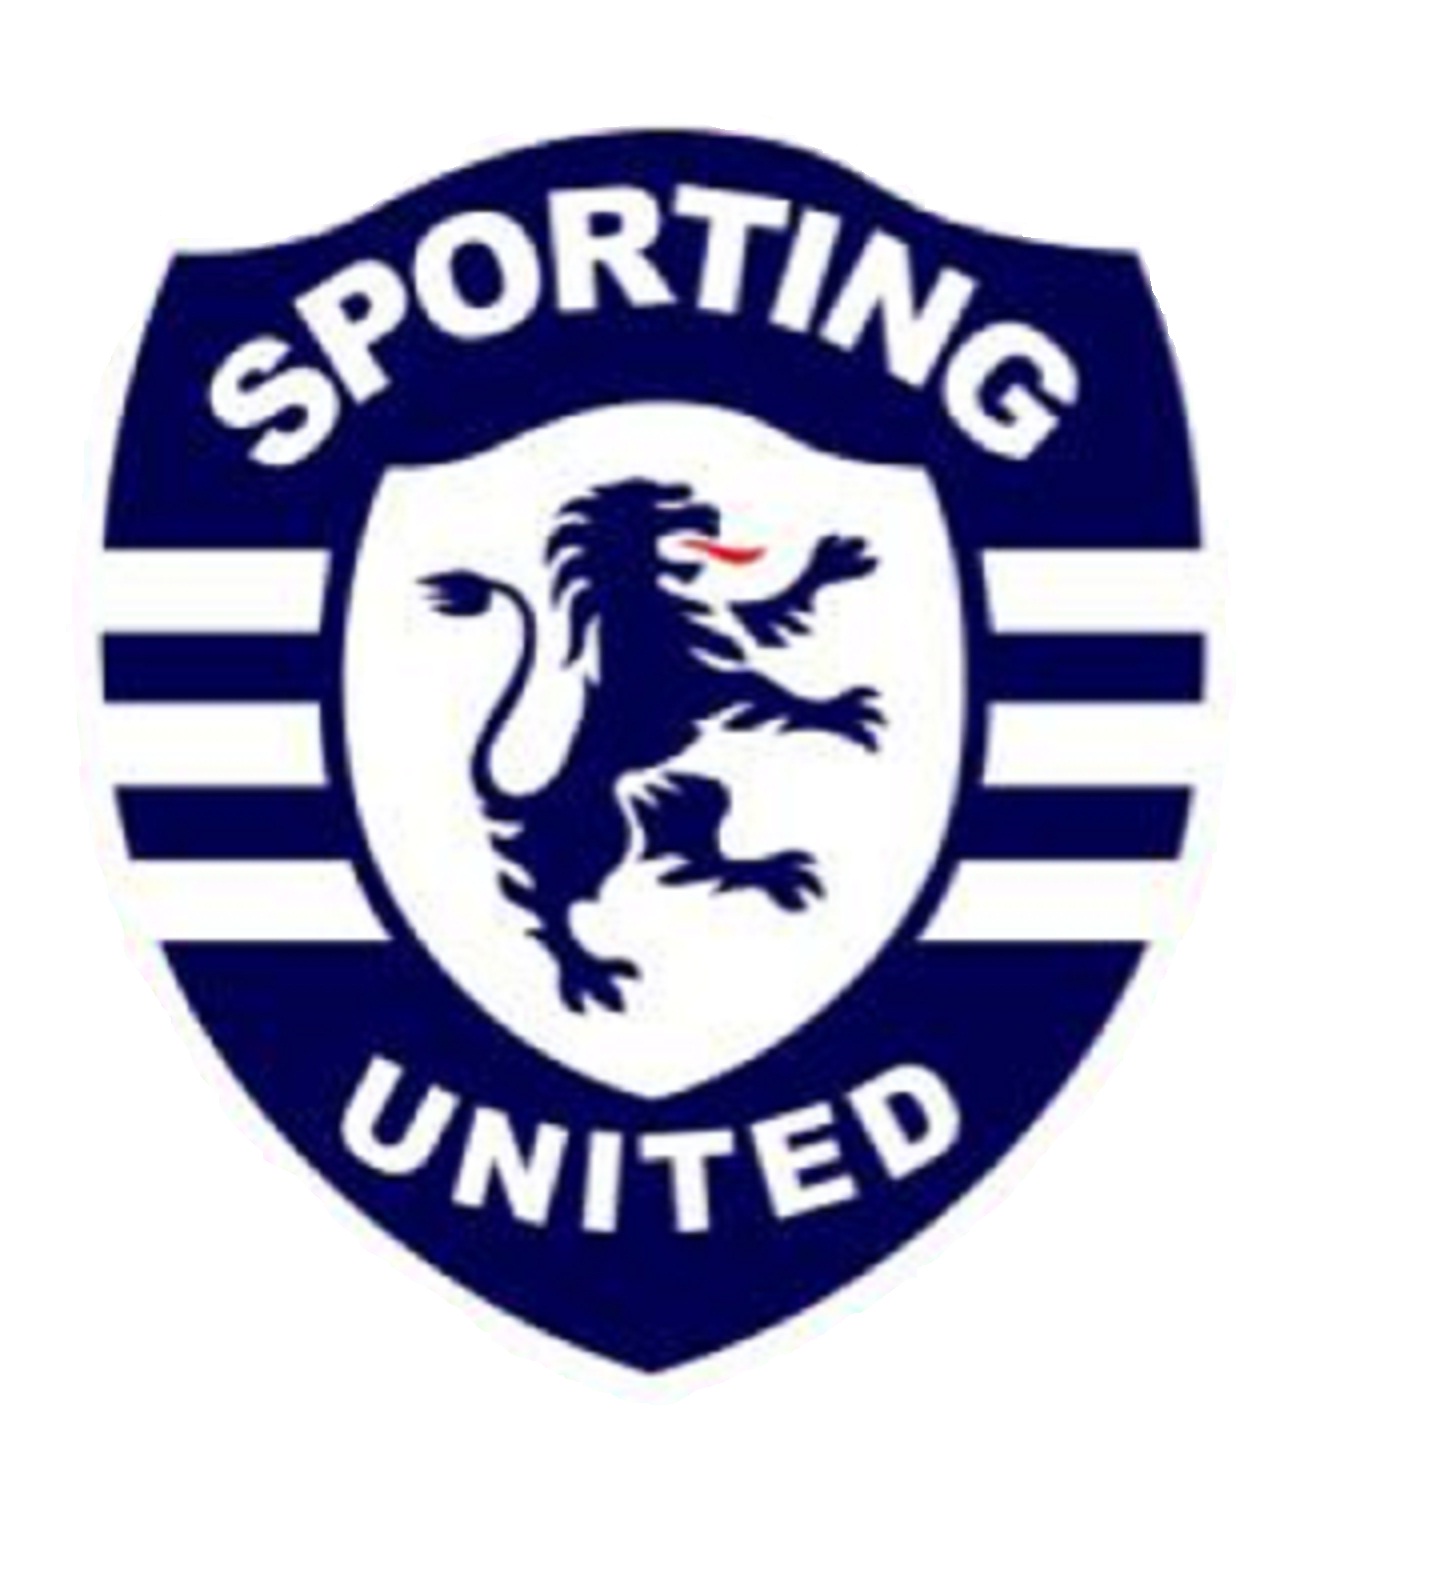 Sporting United SC team badge